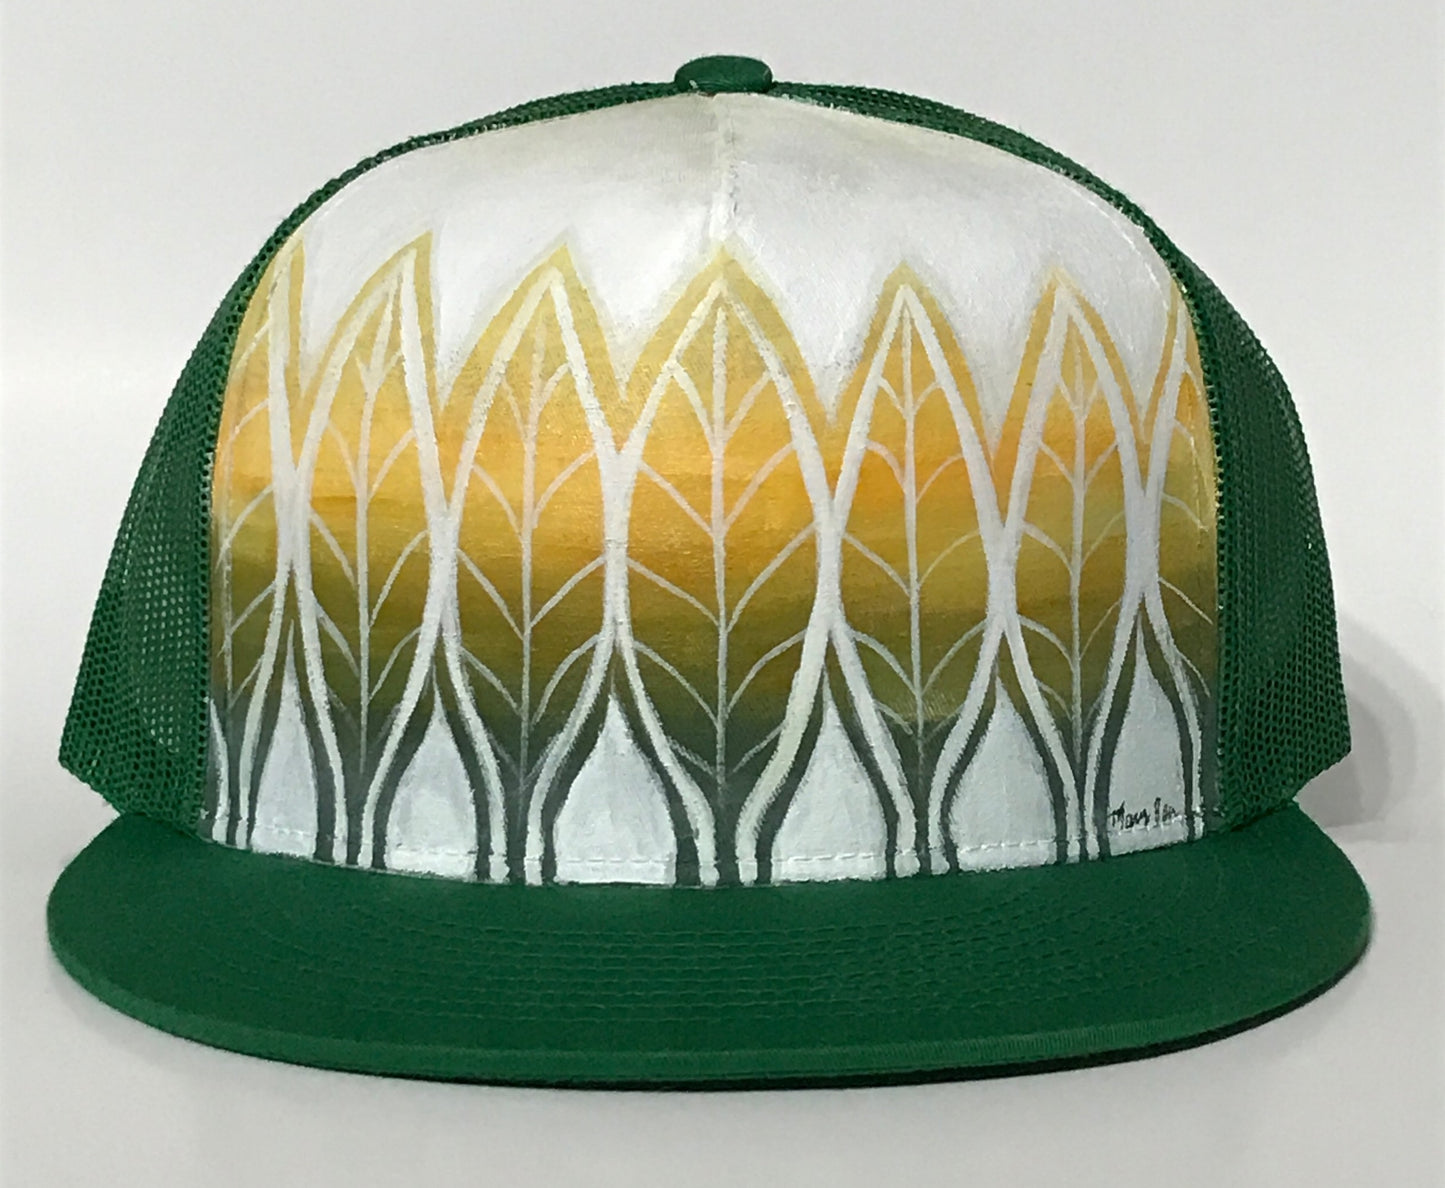 "Leaf Print" Hand Painted on Green Snapback Trucker Hat